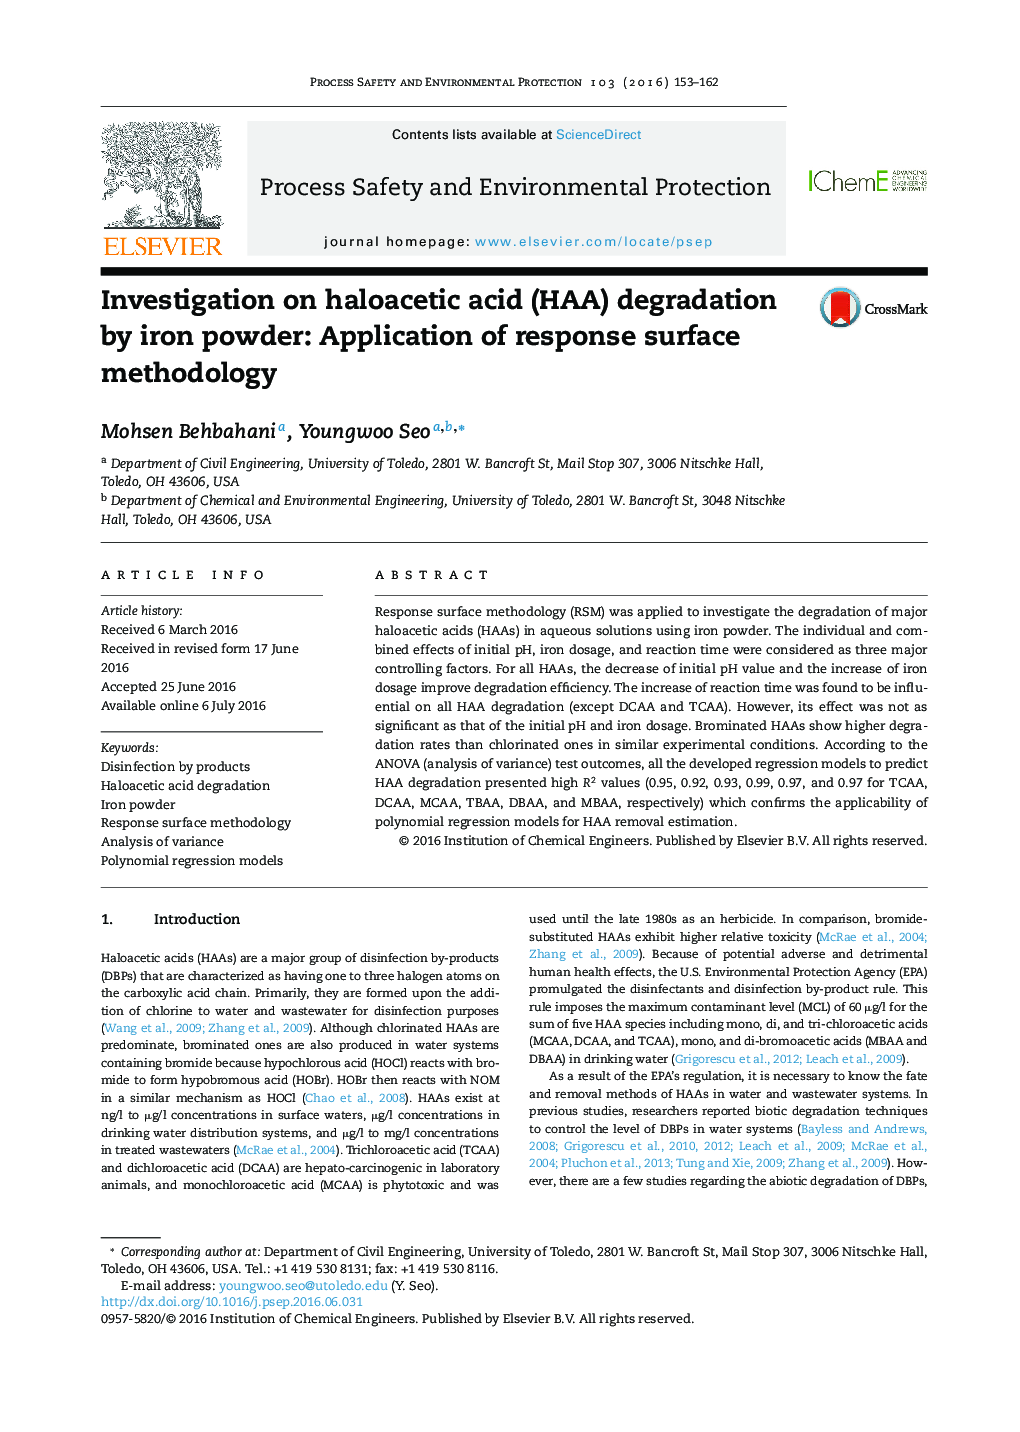 Investigation on haloacetic acid (HAA) degradation by iron powder: Application of response surface methodology